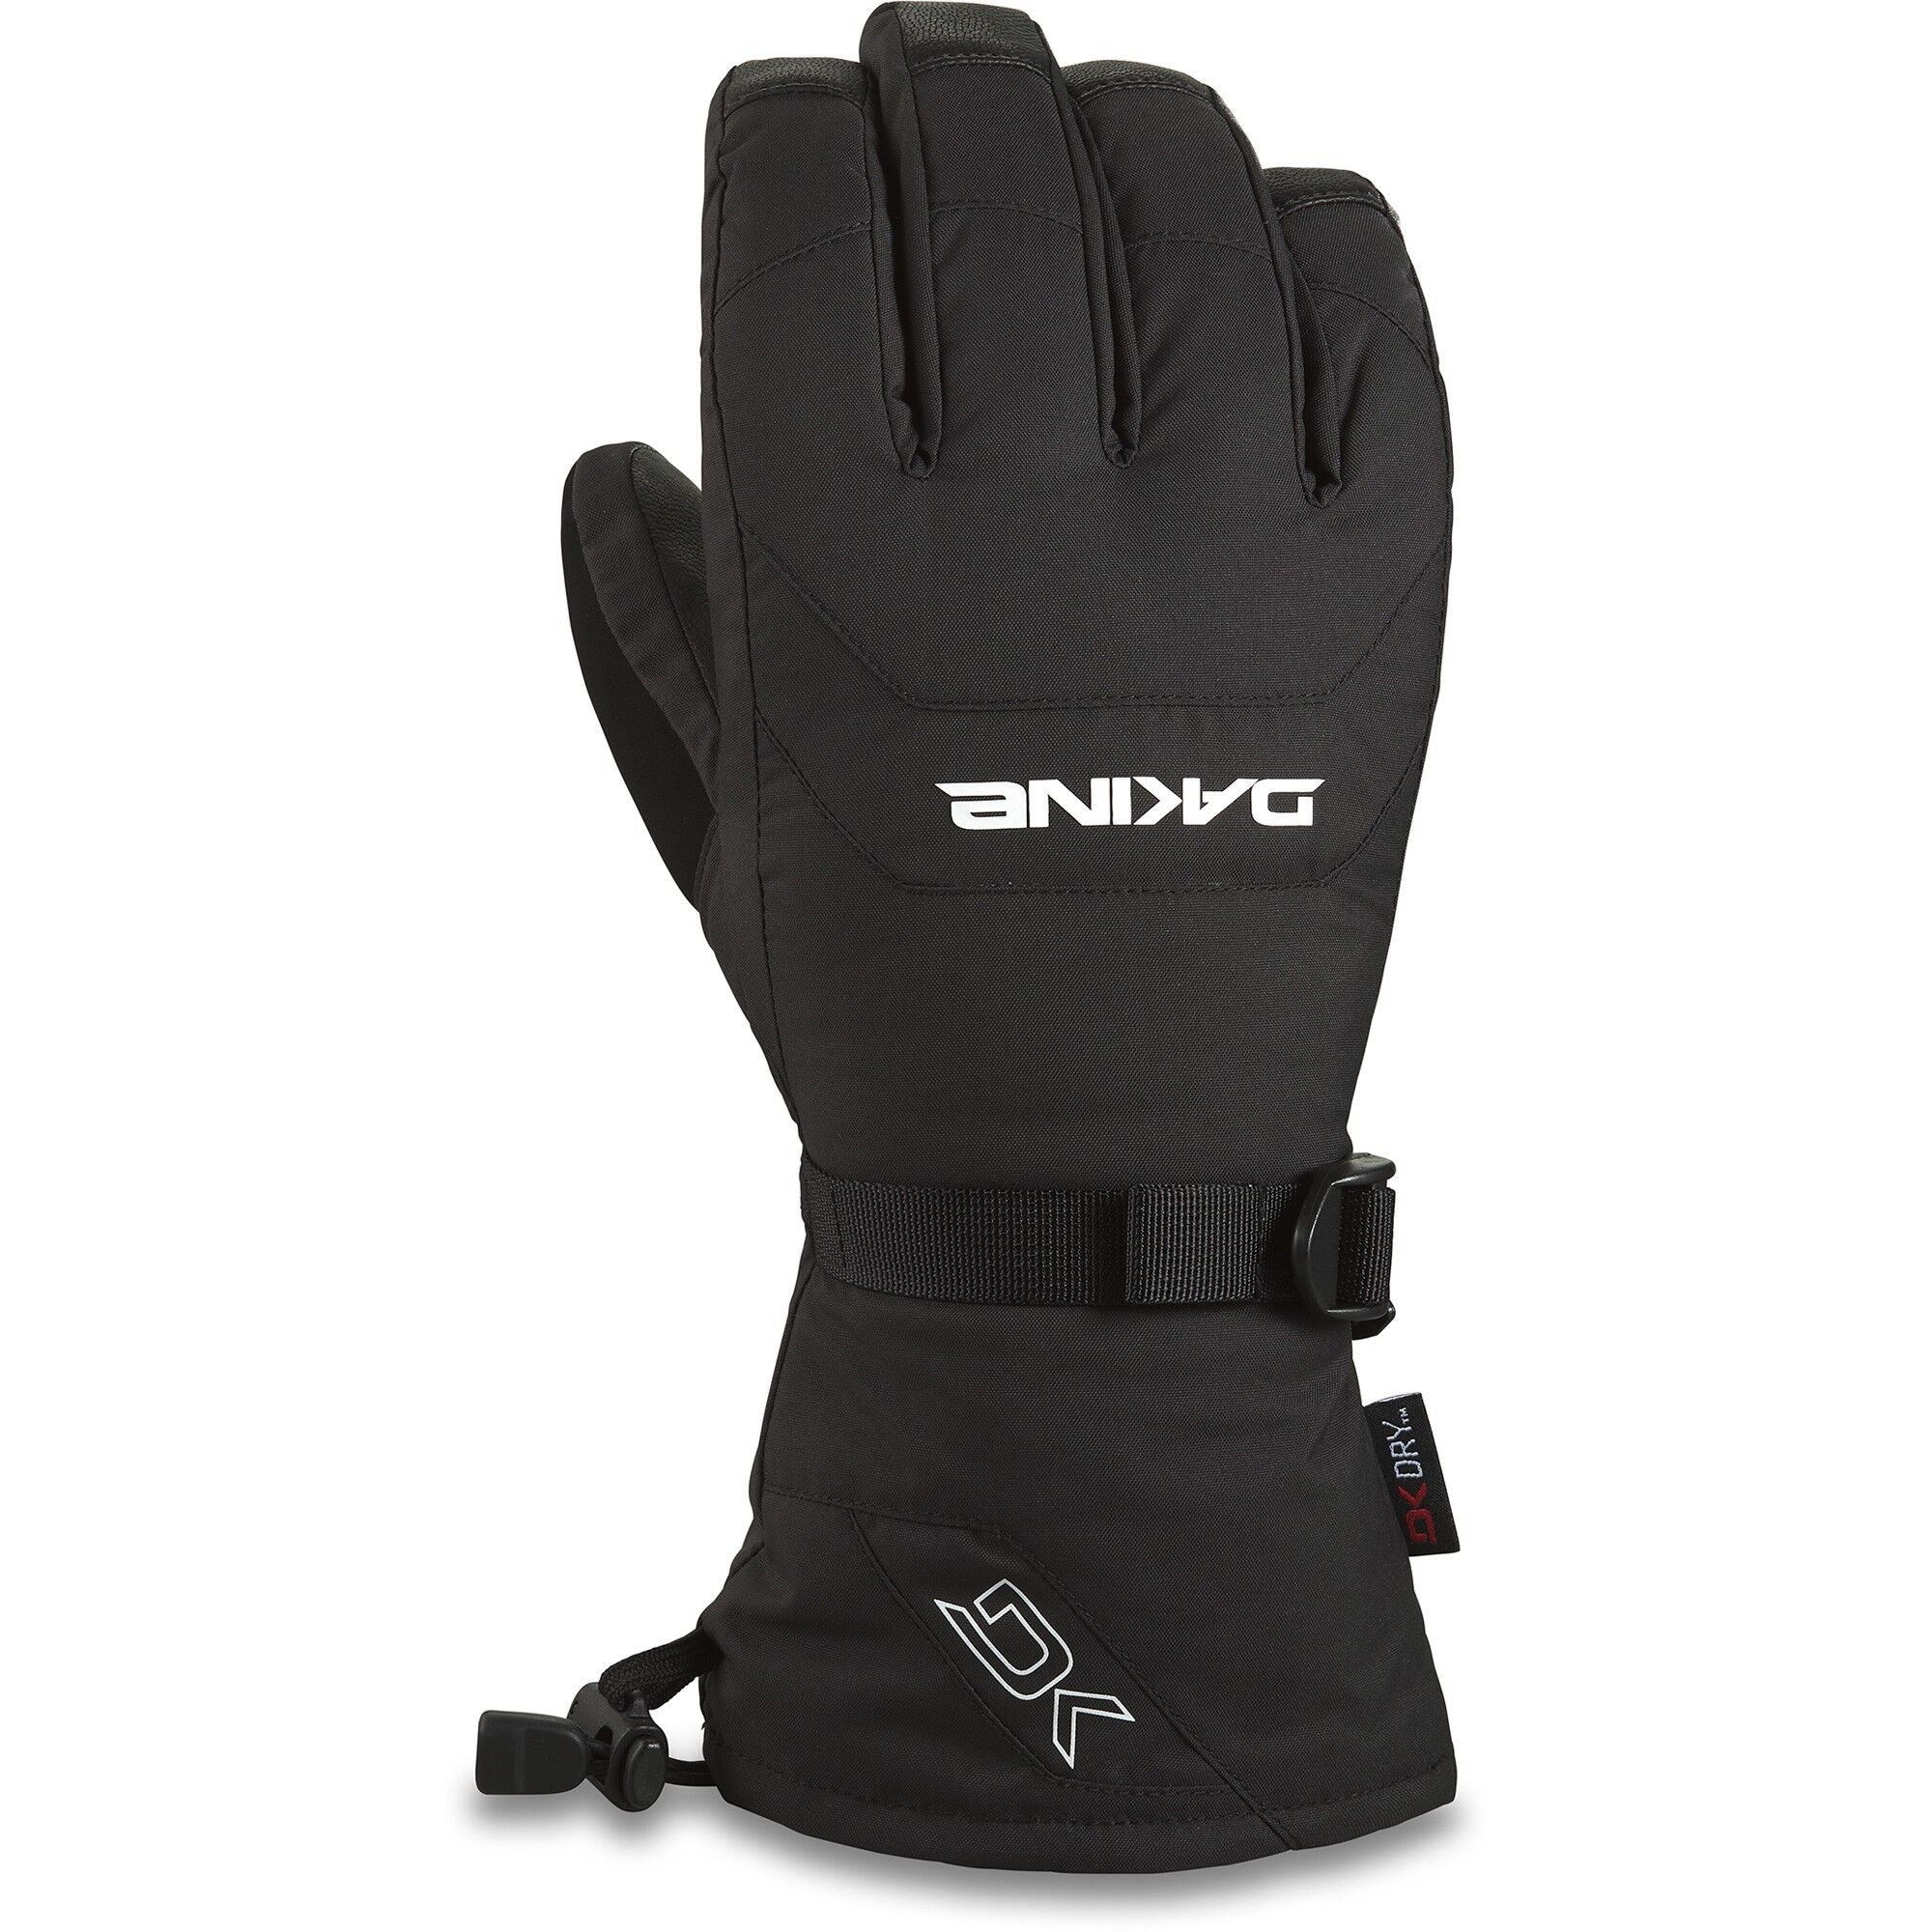 Dakine Leather Scout Glove - Ski gloves - Men's